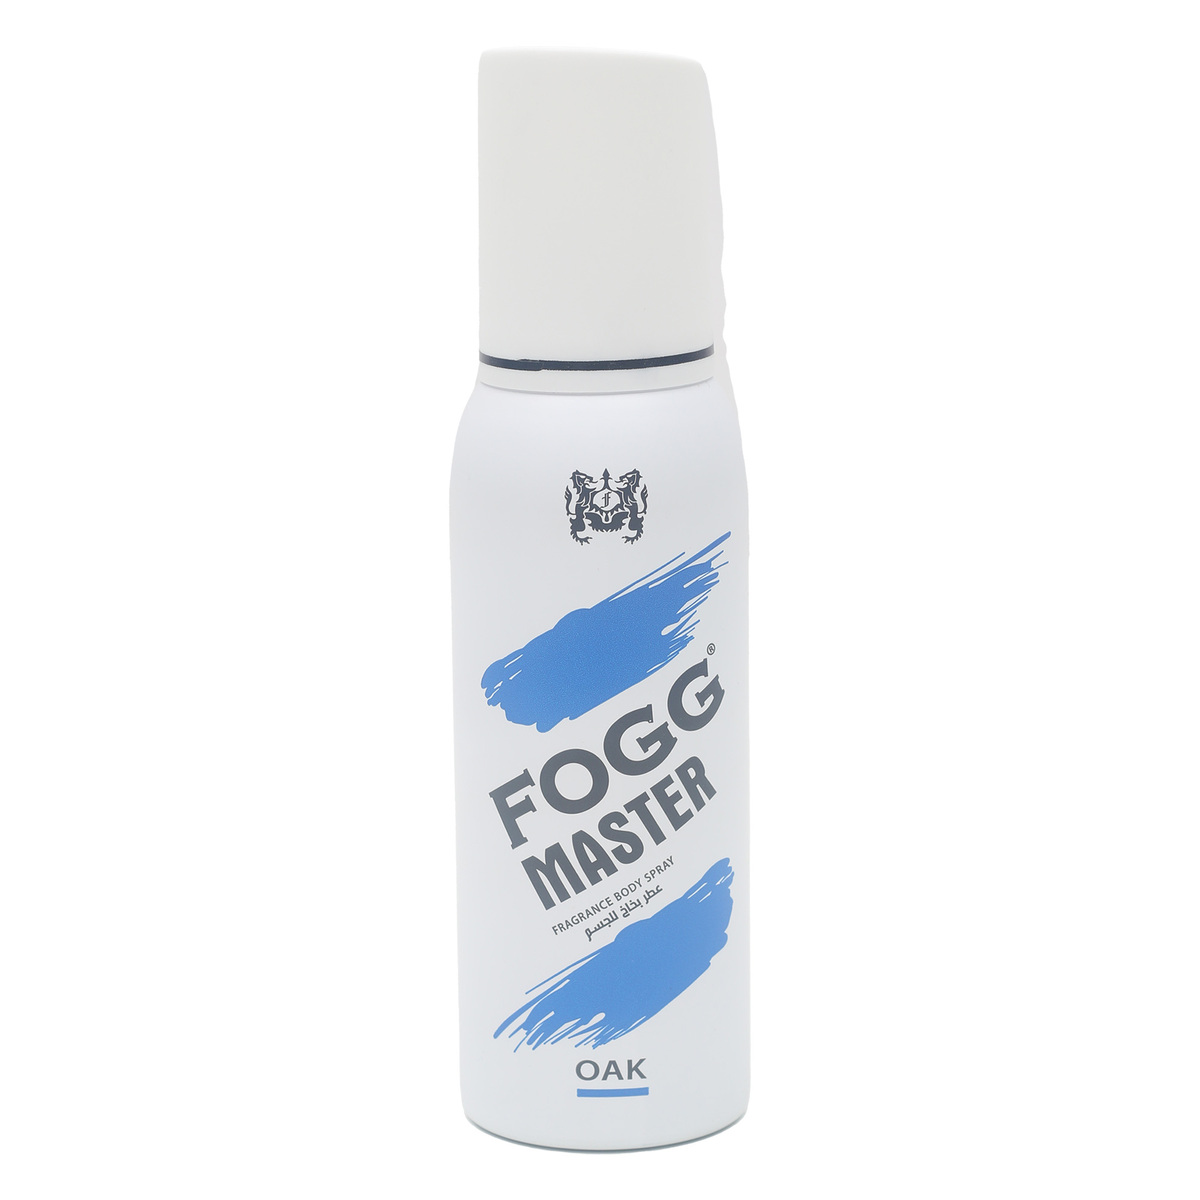 Fogg Master Body Spray Oak 120 ml